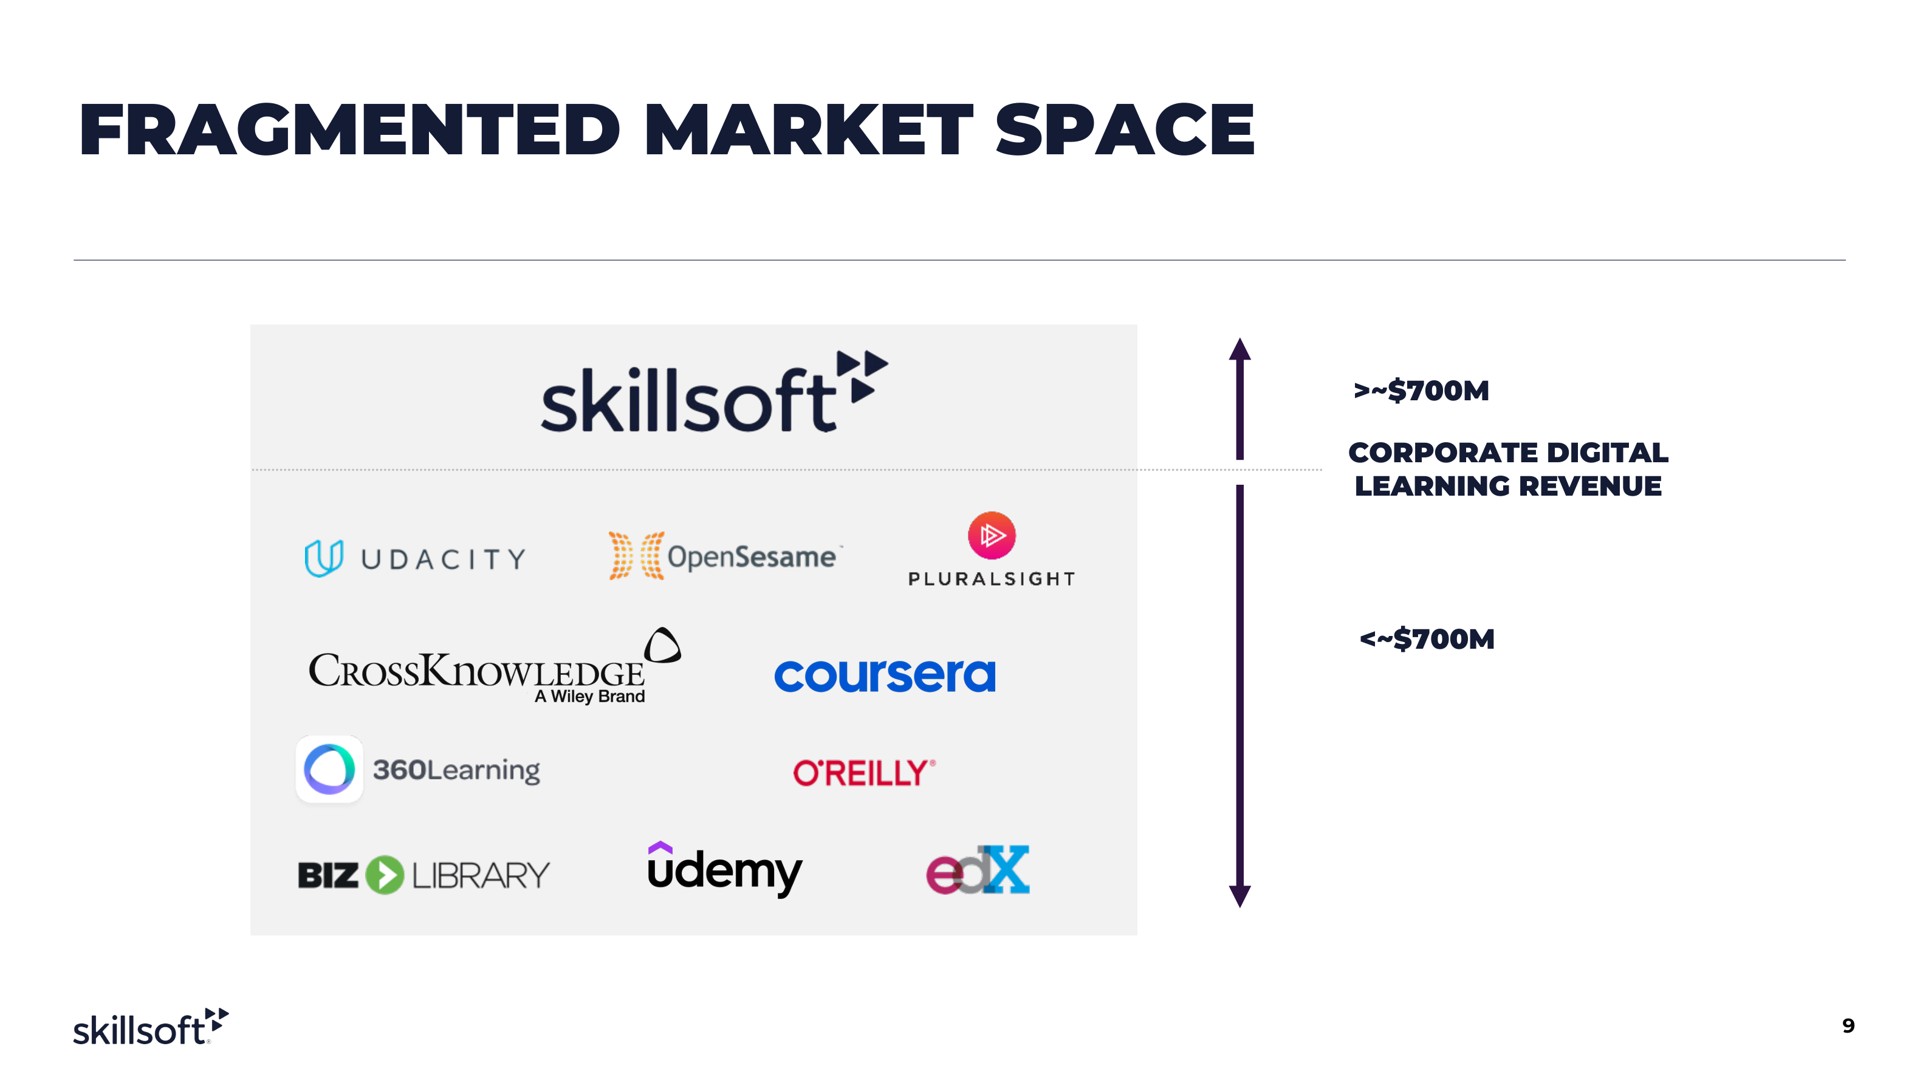 fragmented market space biz library | Skillsoft